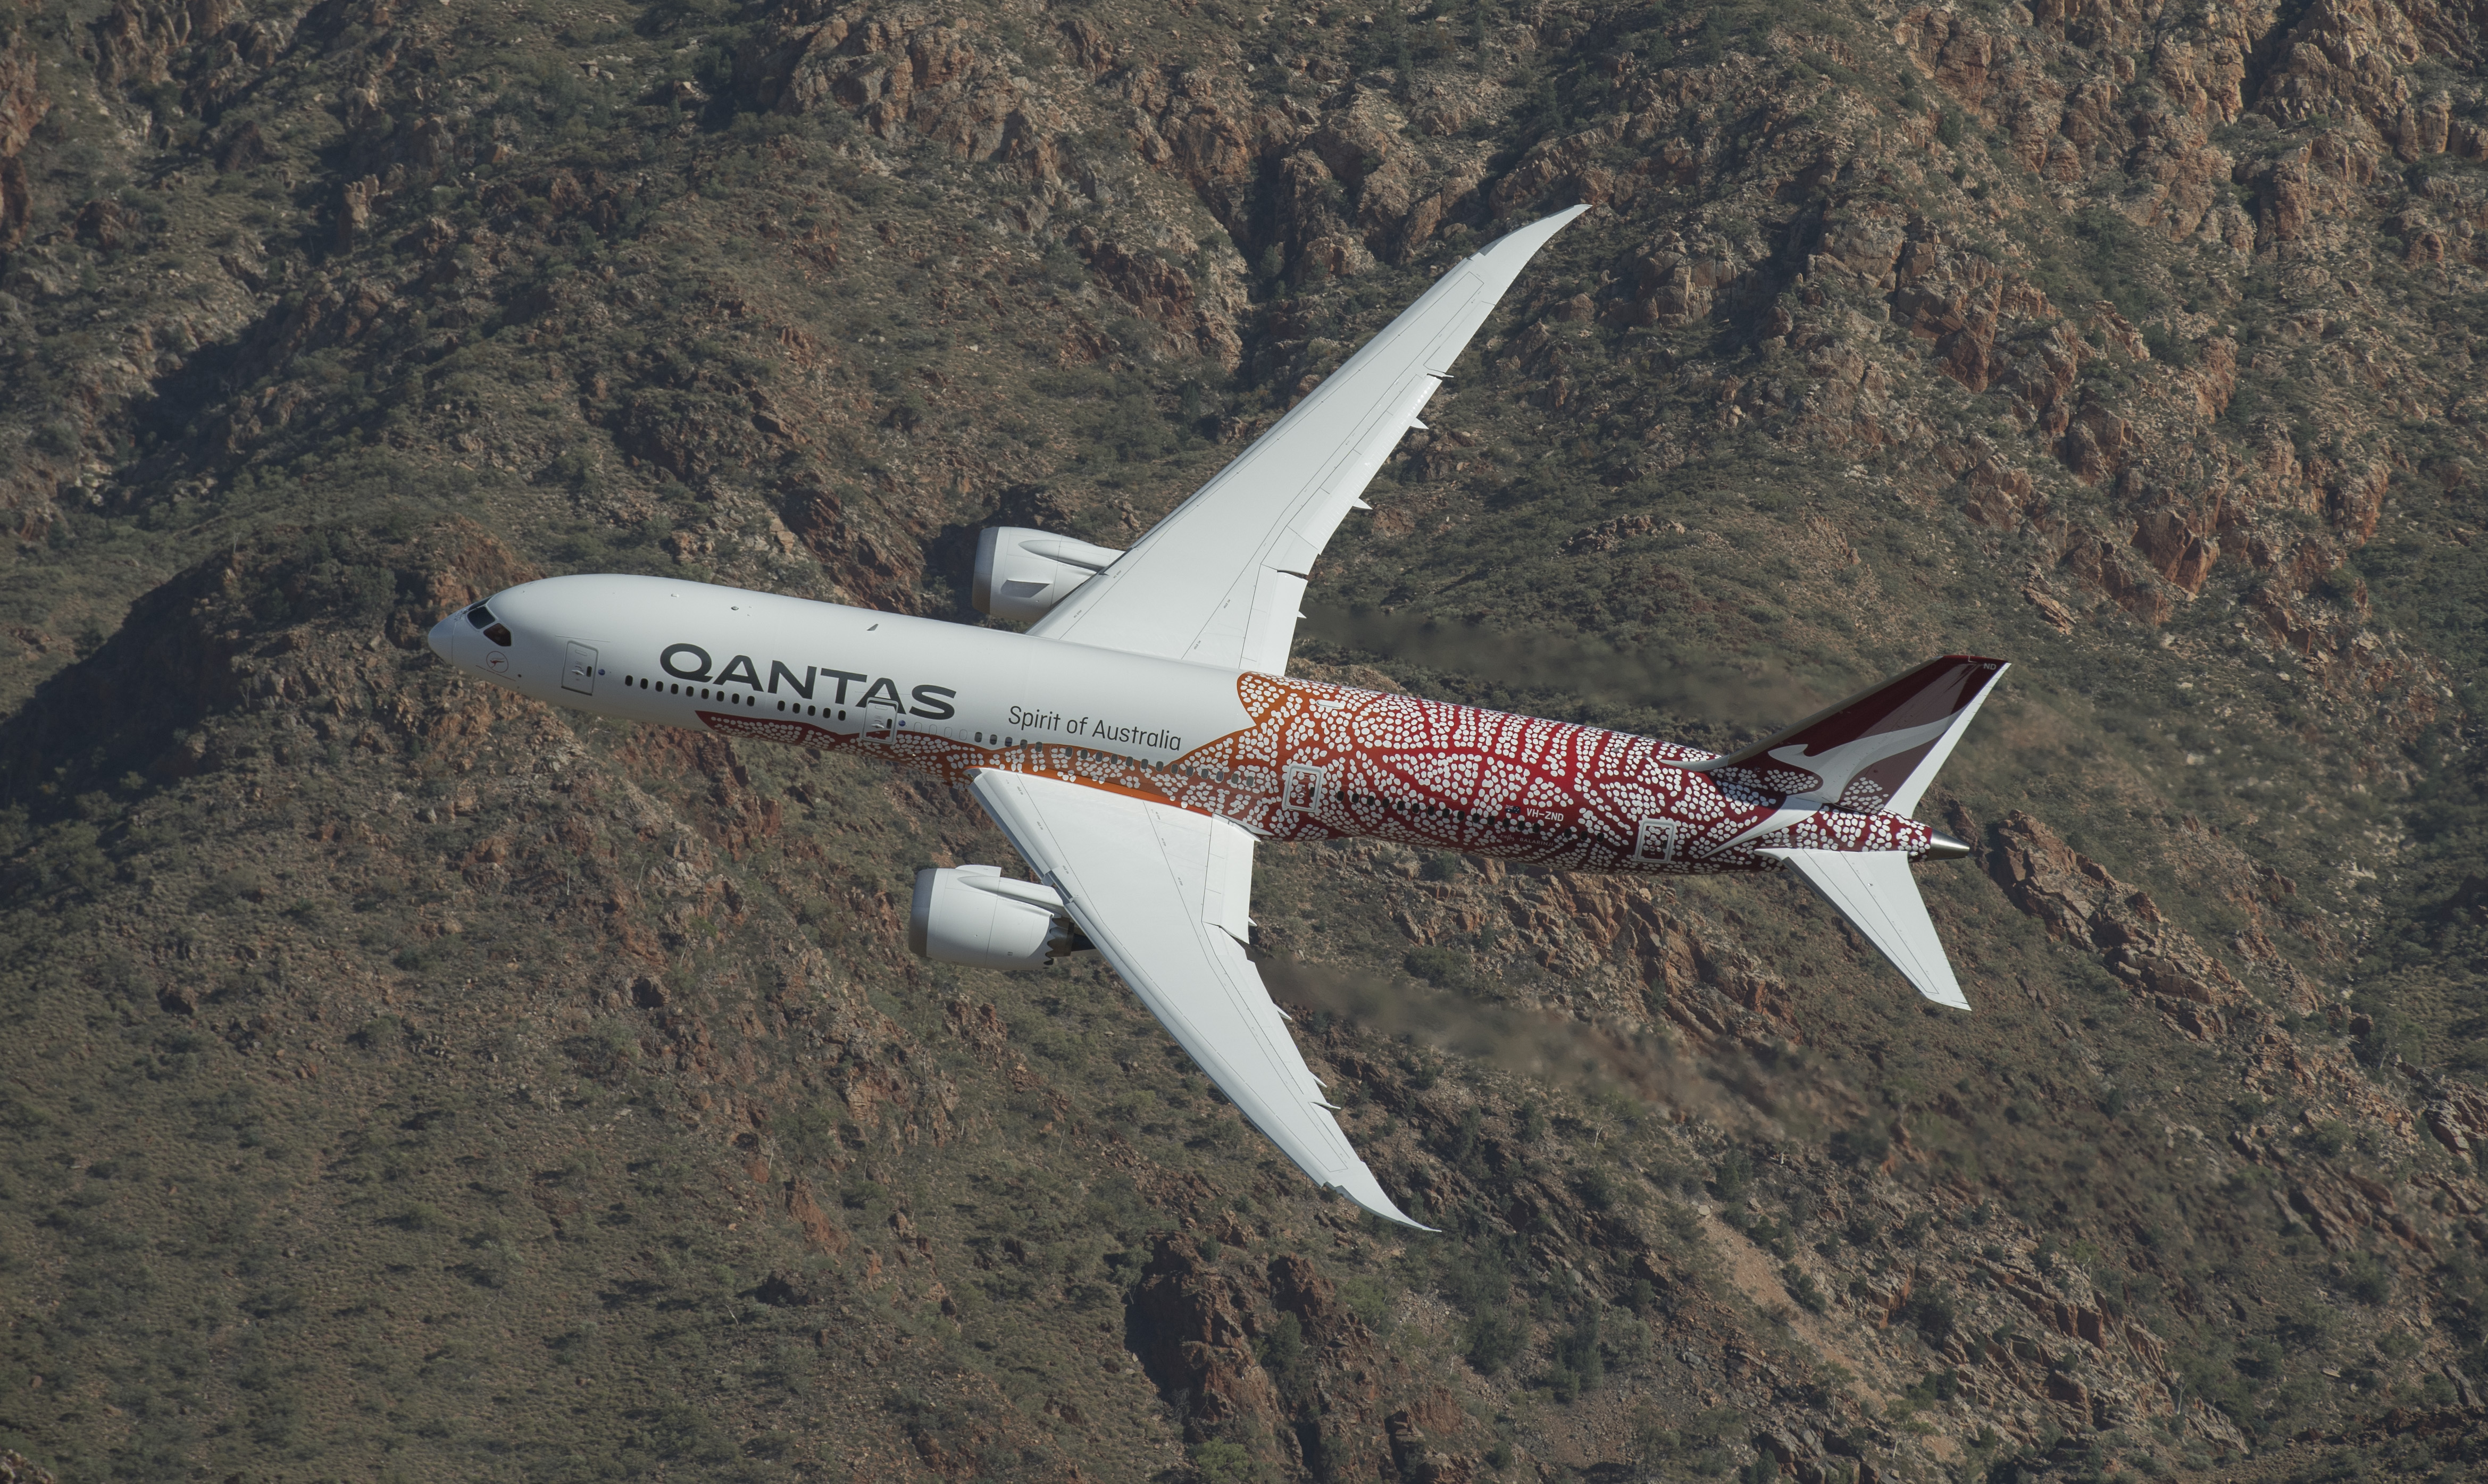 Qantas Dreamliner joy flight a ticket to Australia’s natural wonders